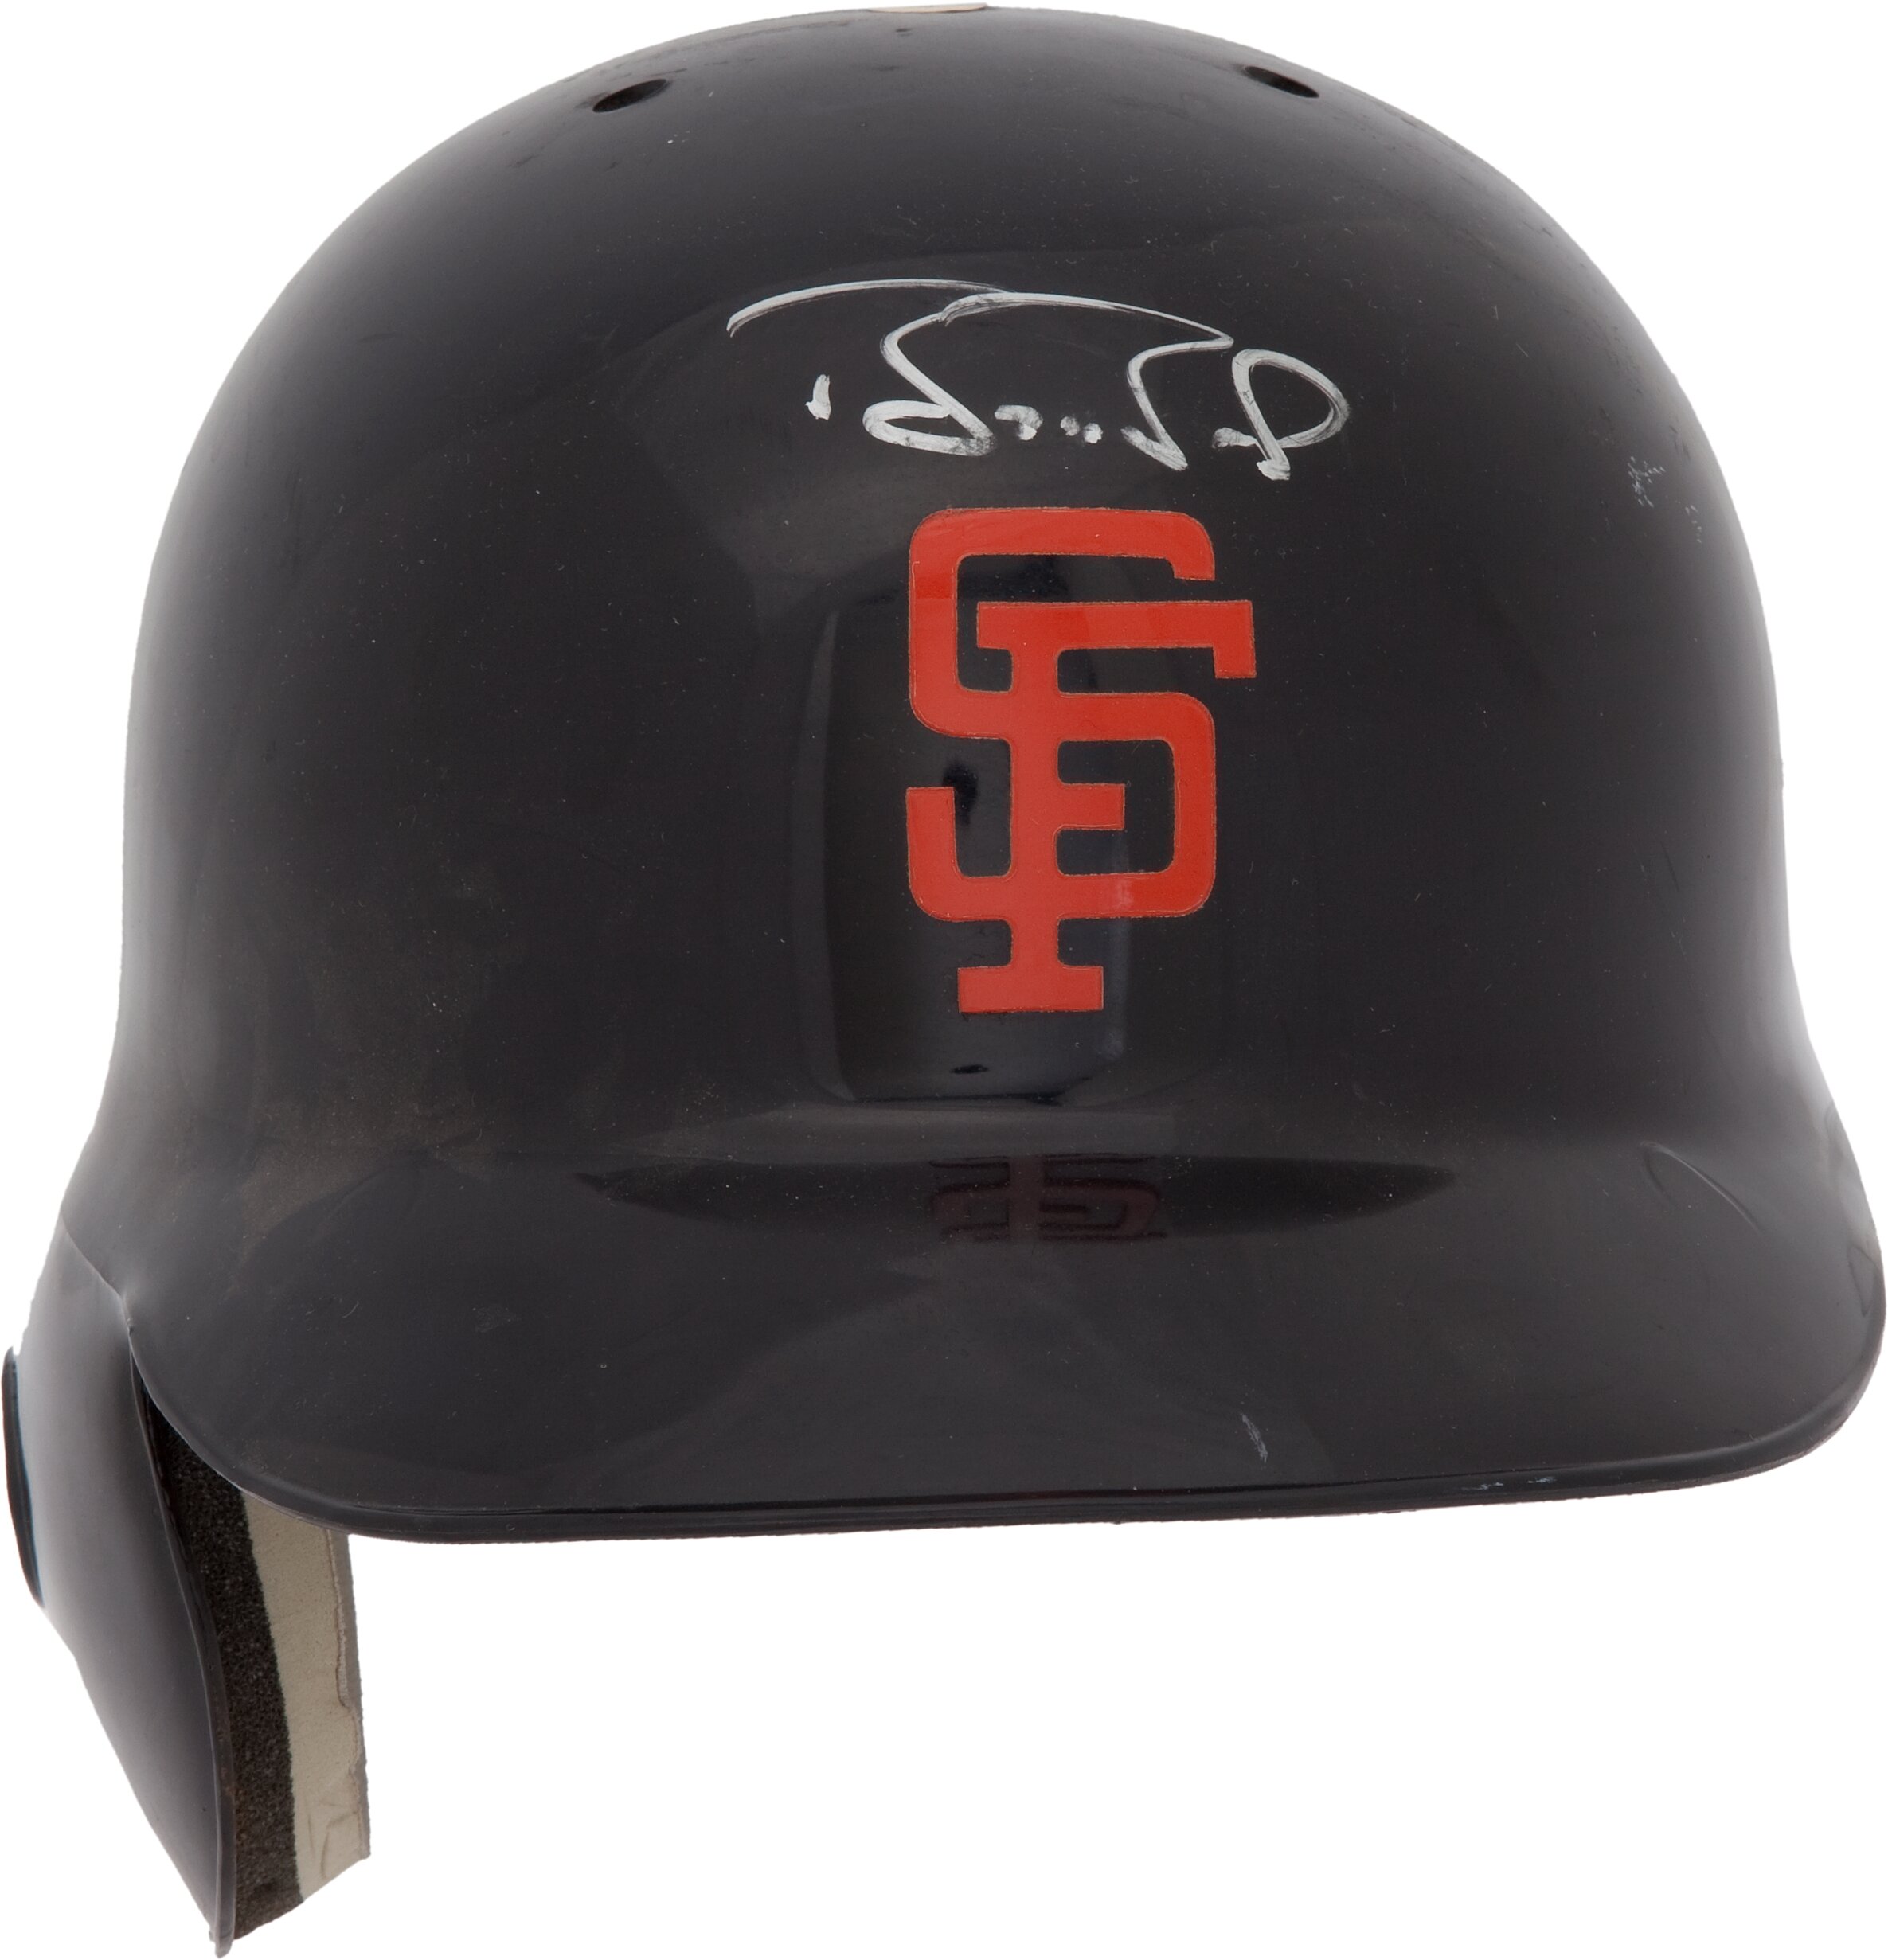 Official San Francisco Giants Baseball Helmets, Giants Collectible,  Autographed Helmets